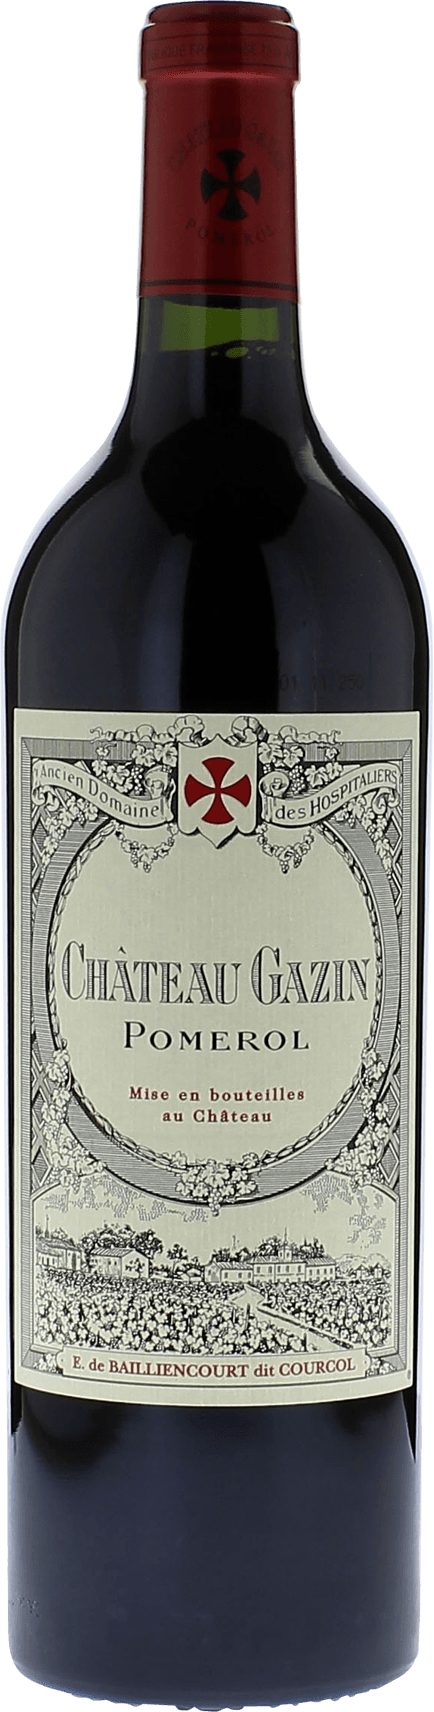 Gazin 1996  Pomerol, Bordeaux rouge